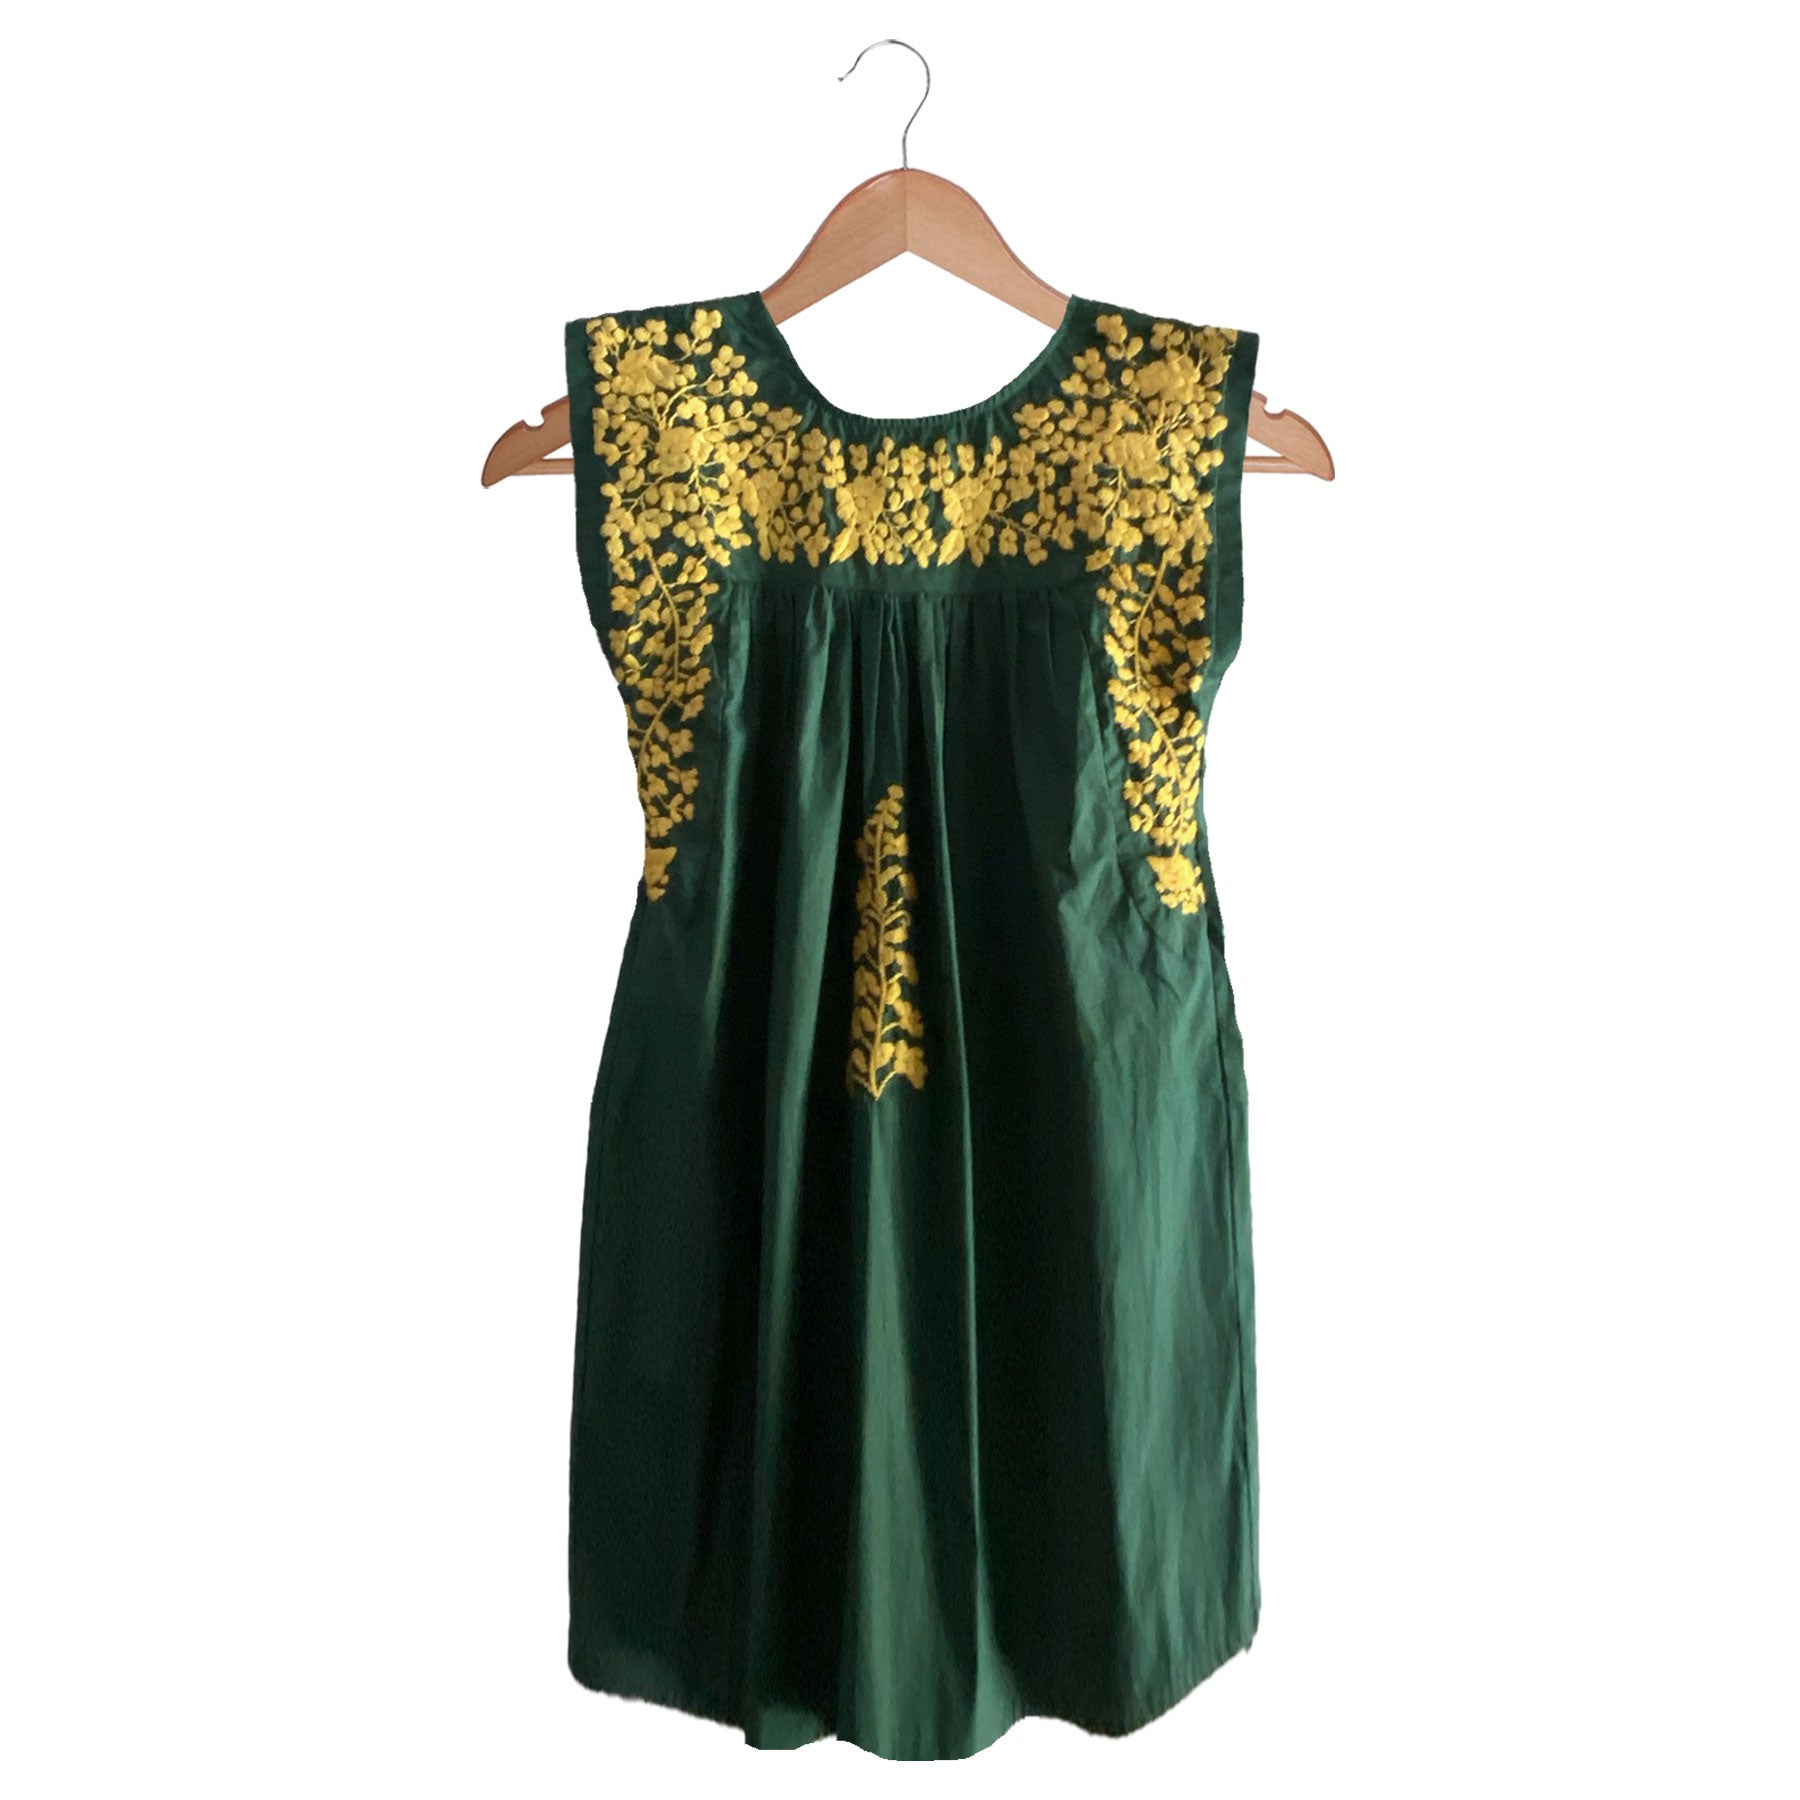 Baylor Green Butterfly Dress